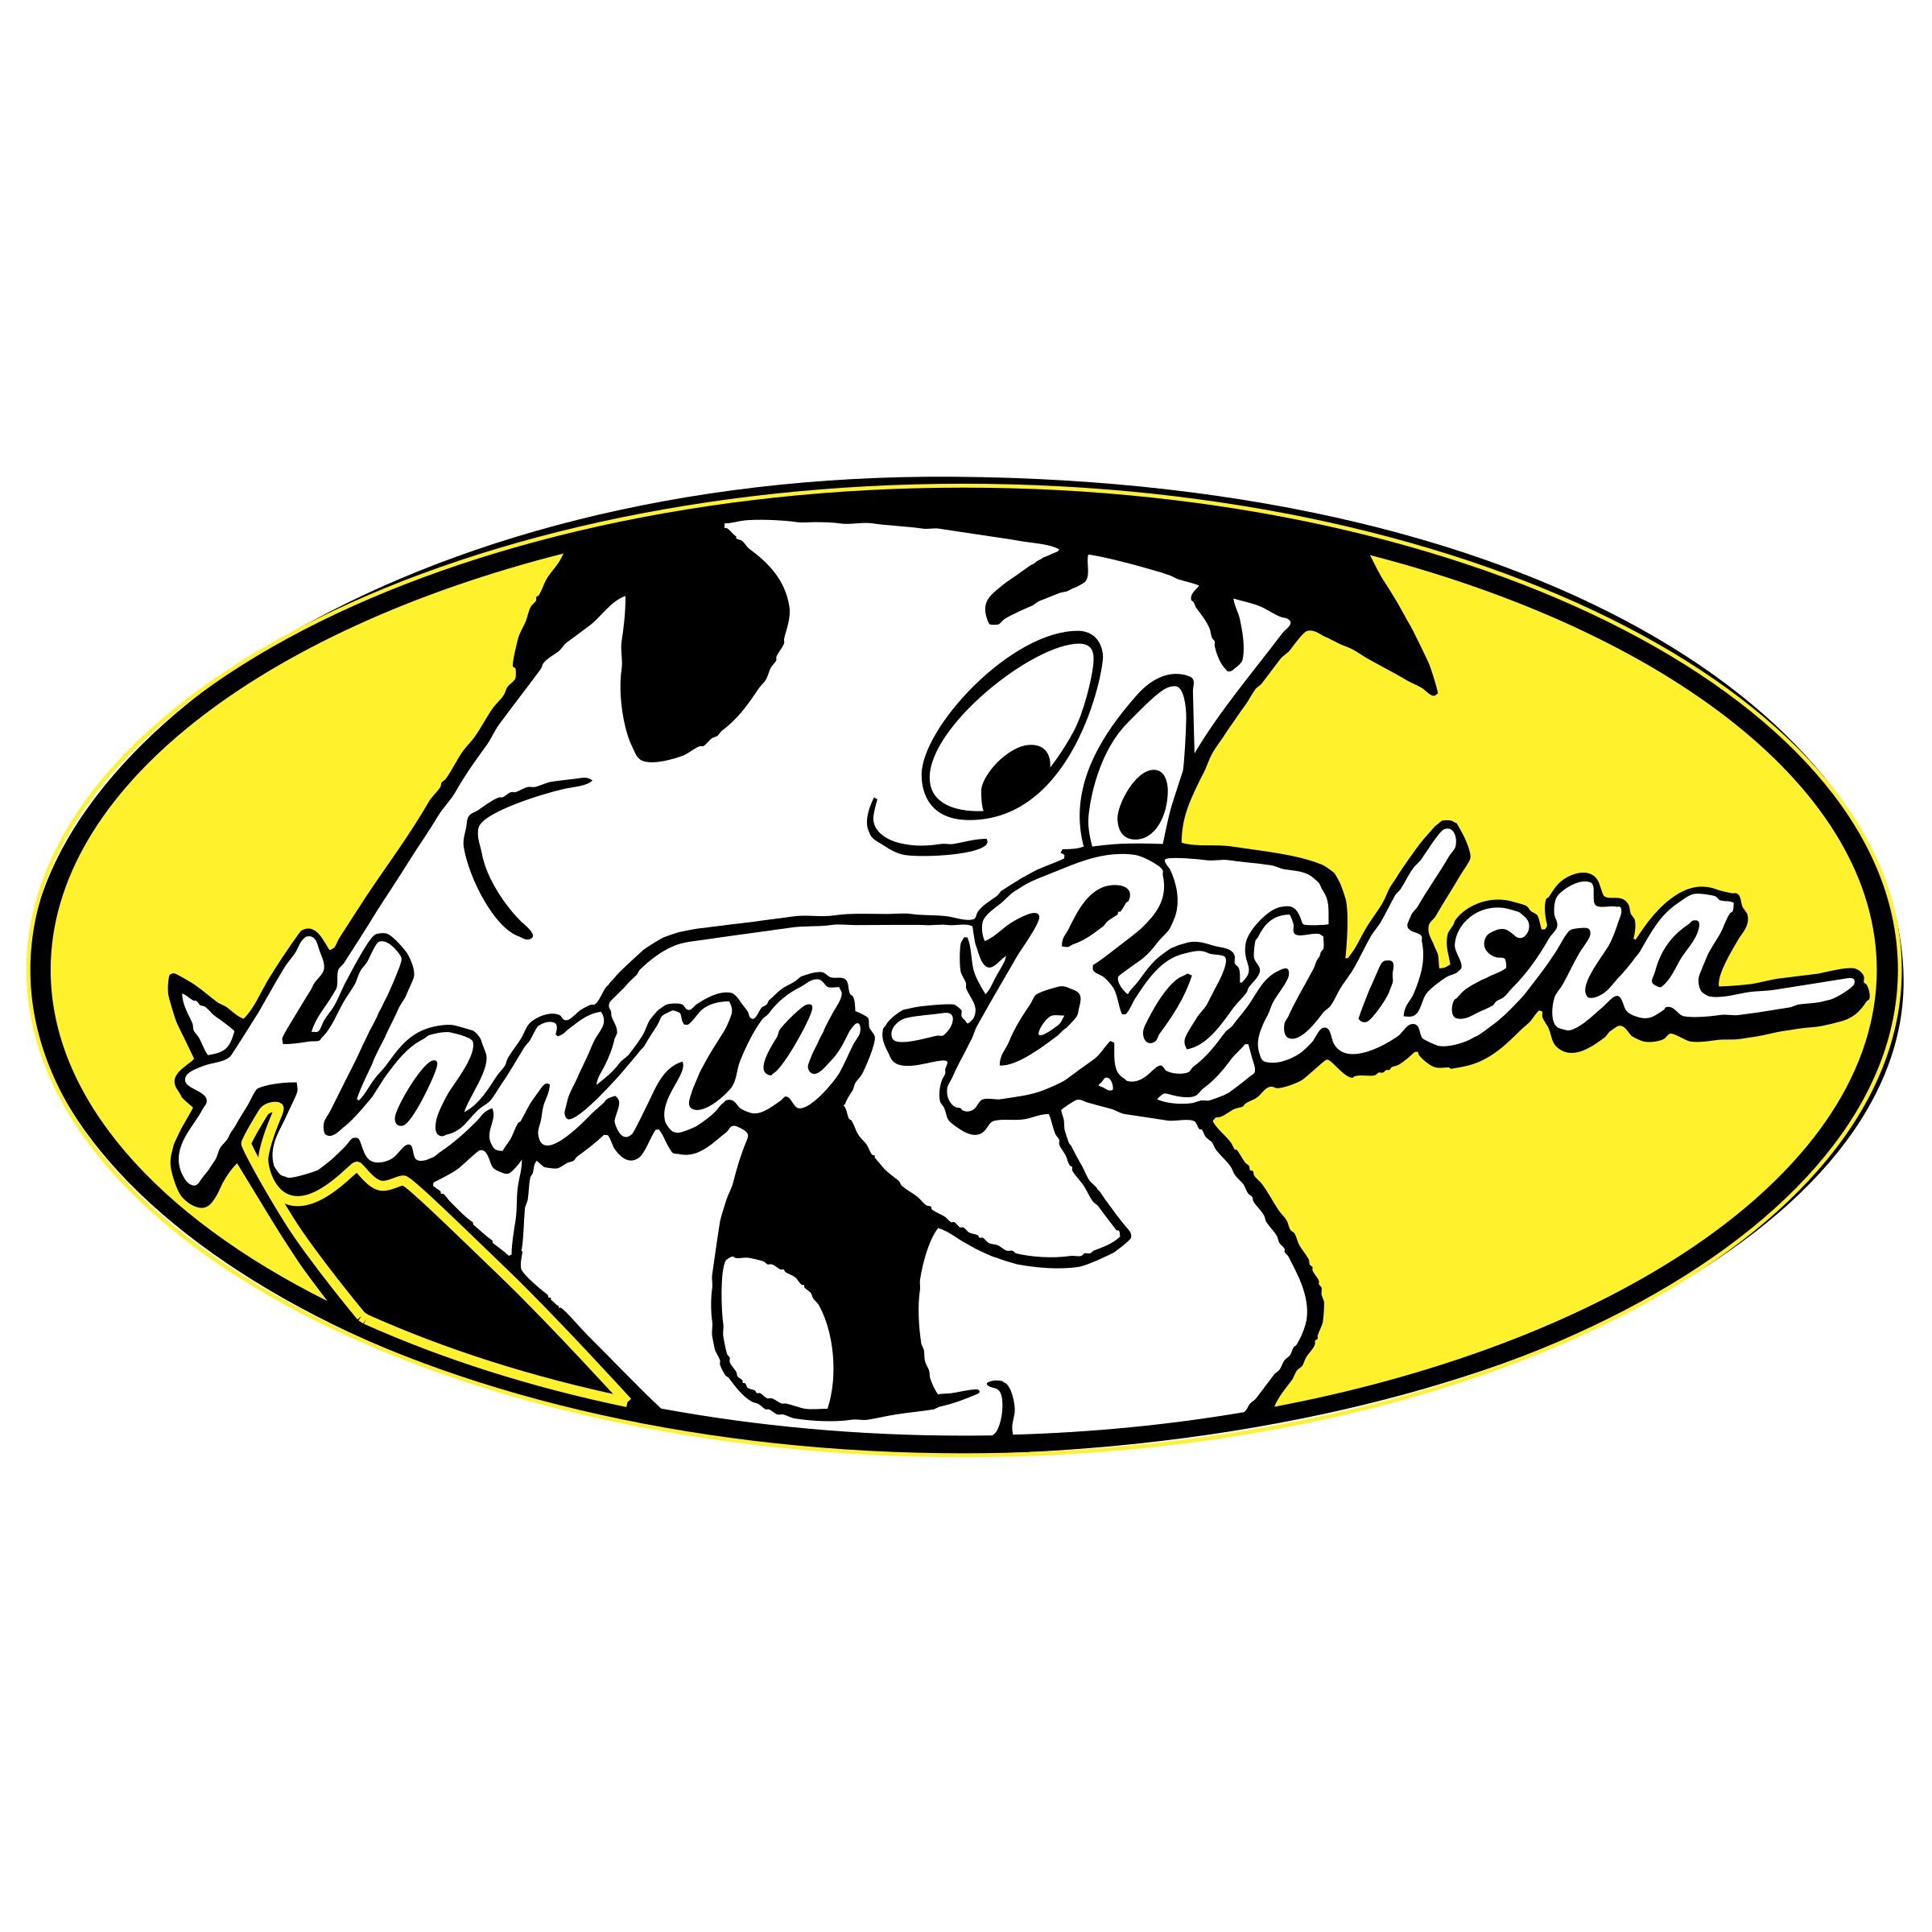 Hanna-Barbera Logo - Hanna Barbera Logo PNG Transparent & SVG Vector - Freebie Supply